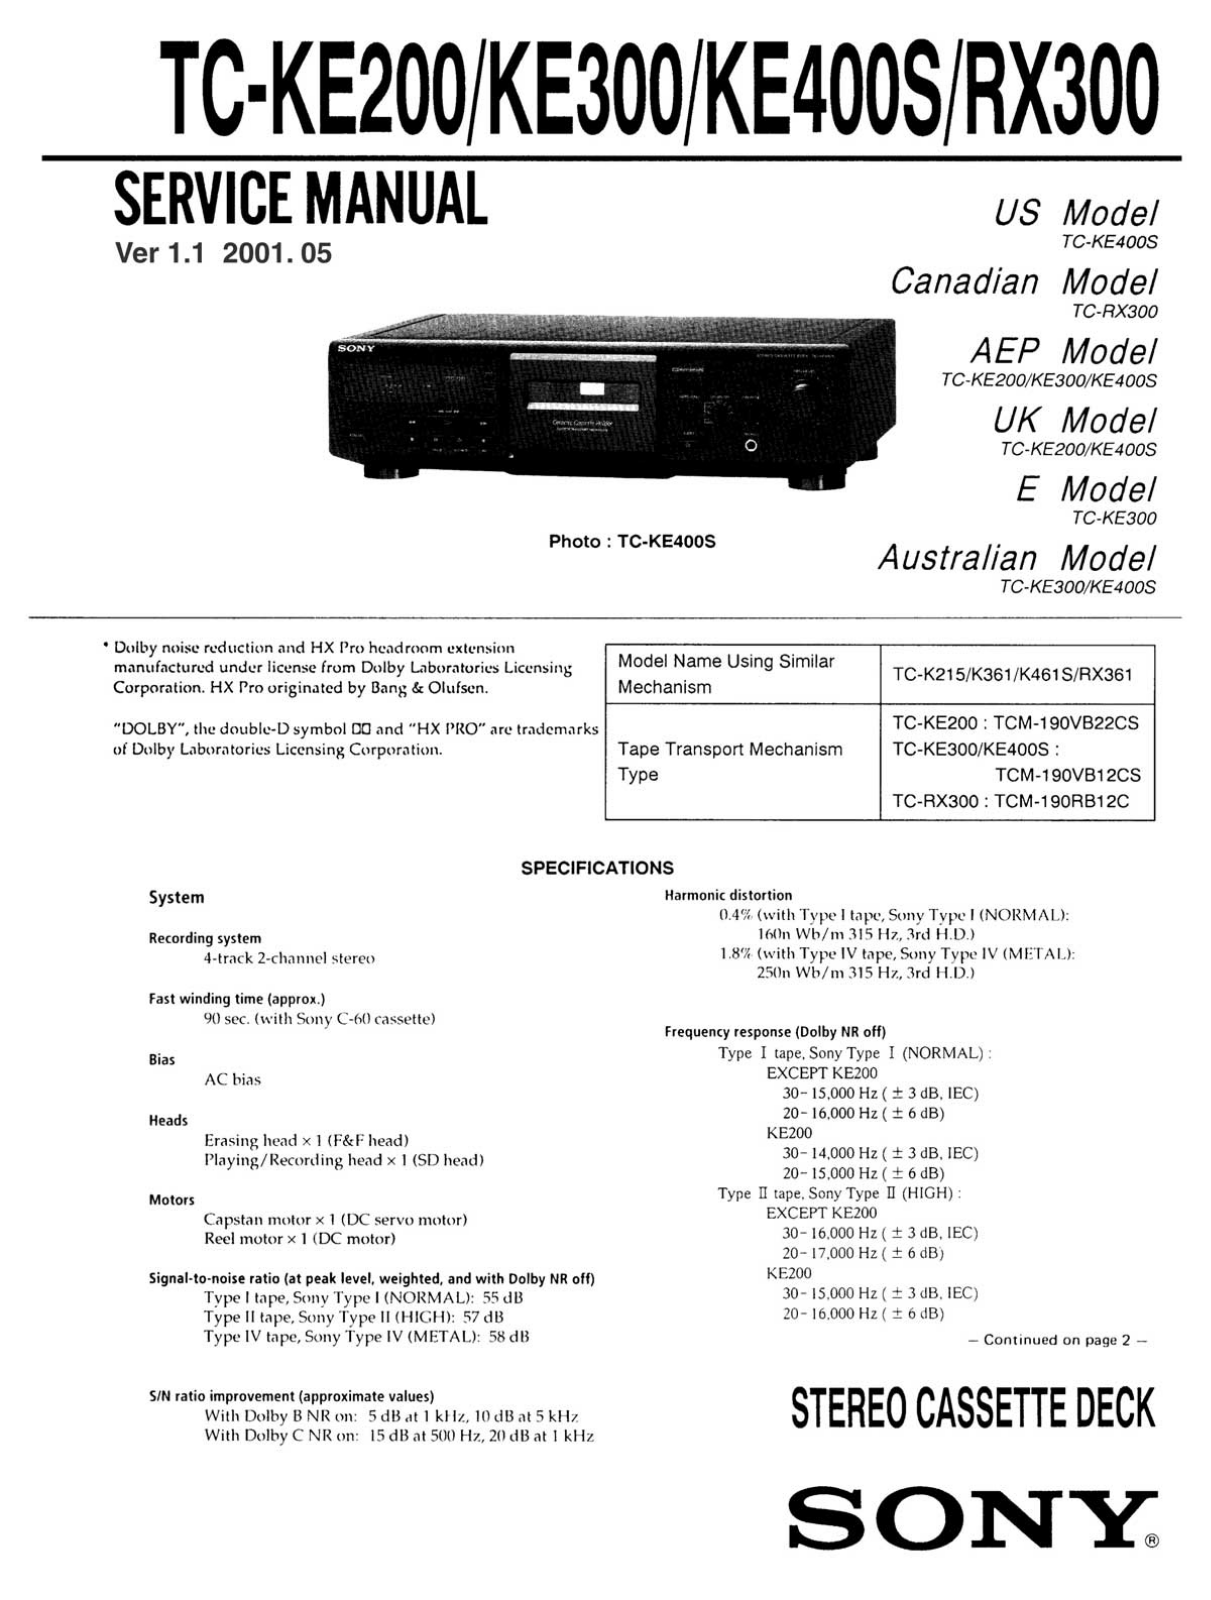 Sony TCKE-200, TCKE-300, TCKE-400-S, TCRX-300 Service manual